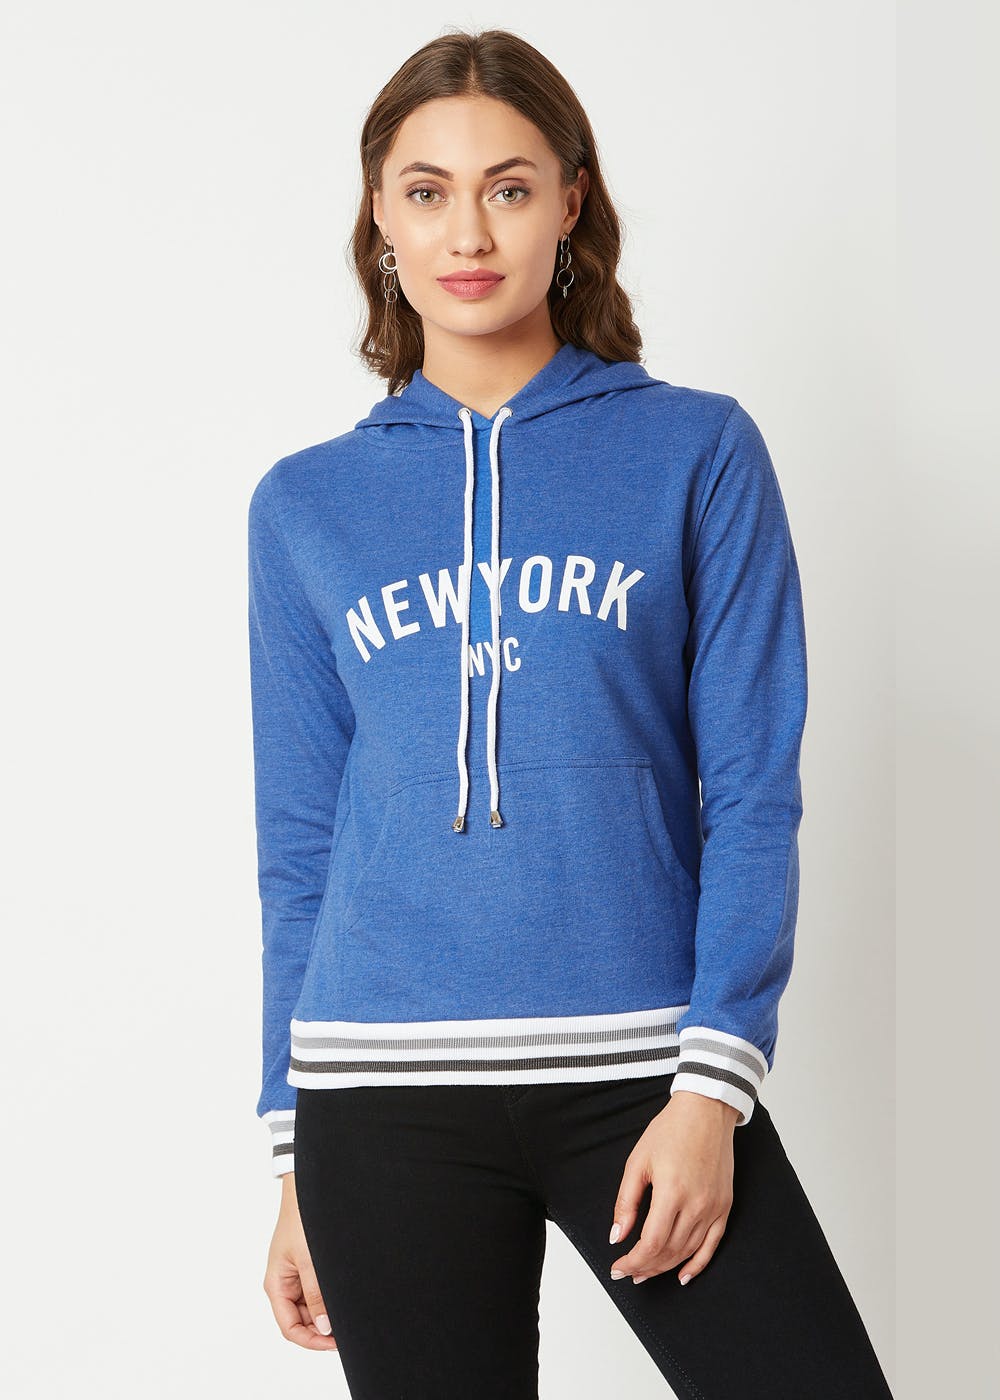 Striped Hem & Graphic Blue Hooded Sweatshirt